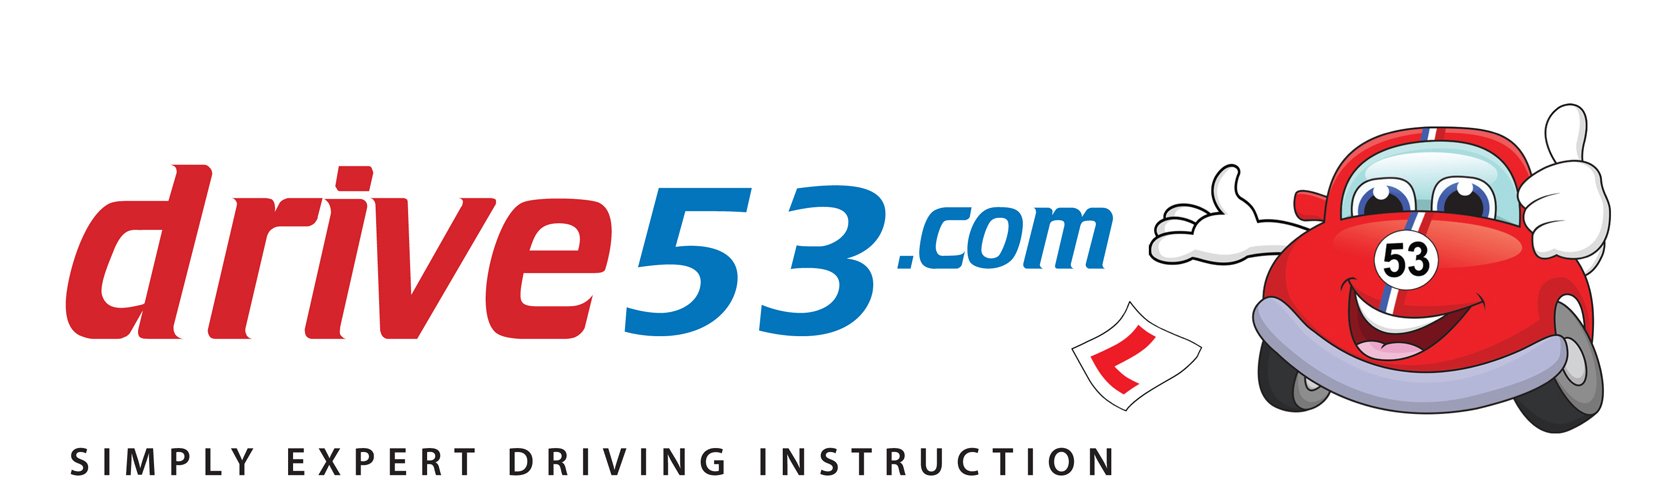 Drive53 driving school logo